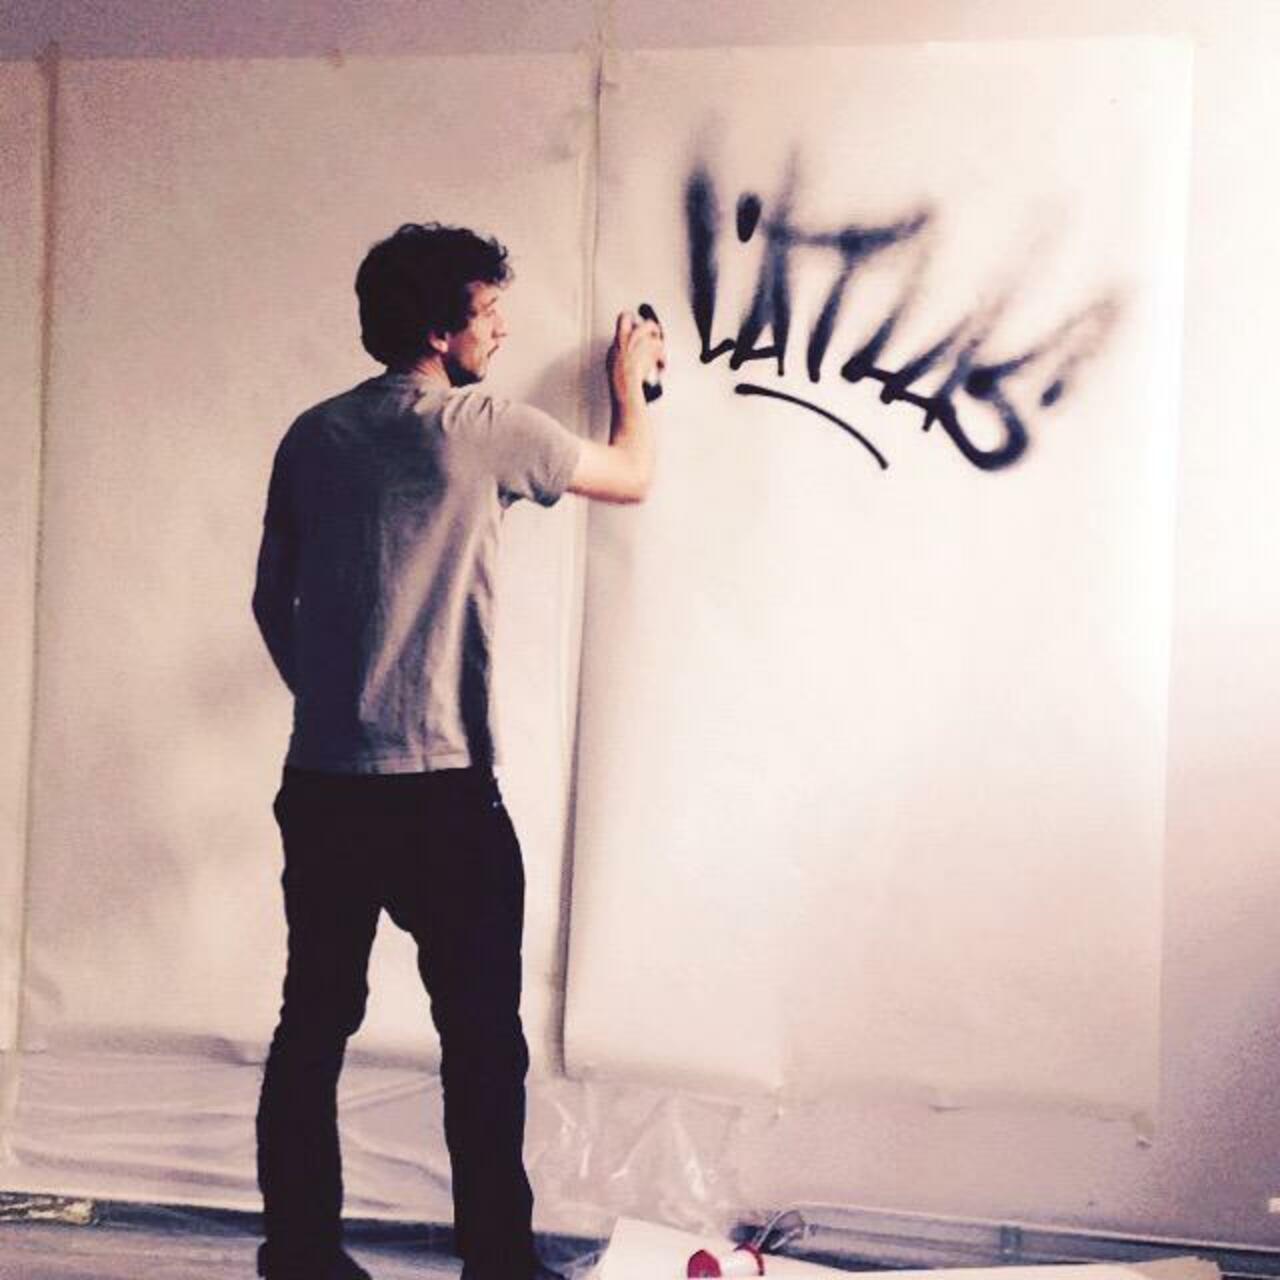 Workshop graff avec Parole! #graffiti #streetart #festival #brussels http://t.co/z92wT05a2N http://ift.tt/1FP7Xuv